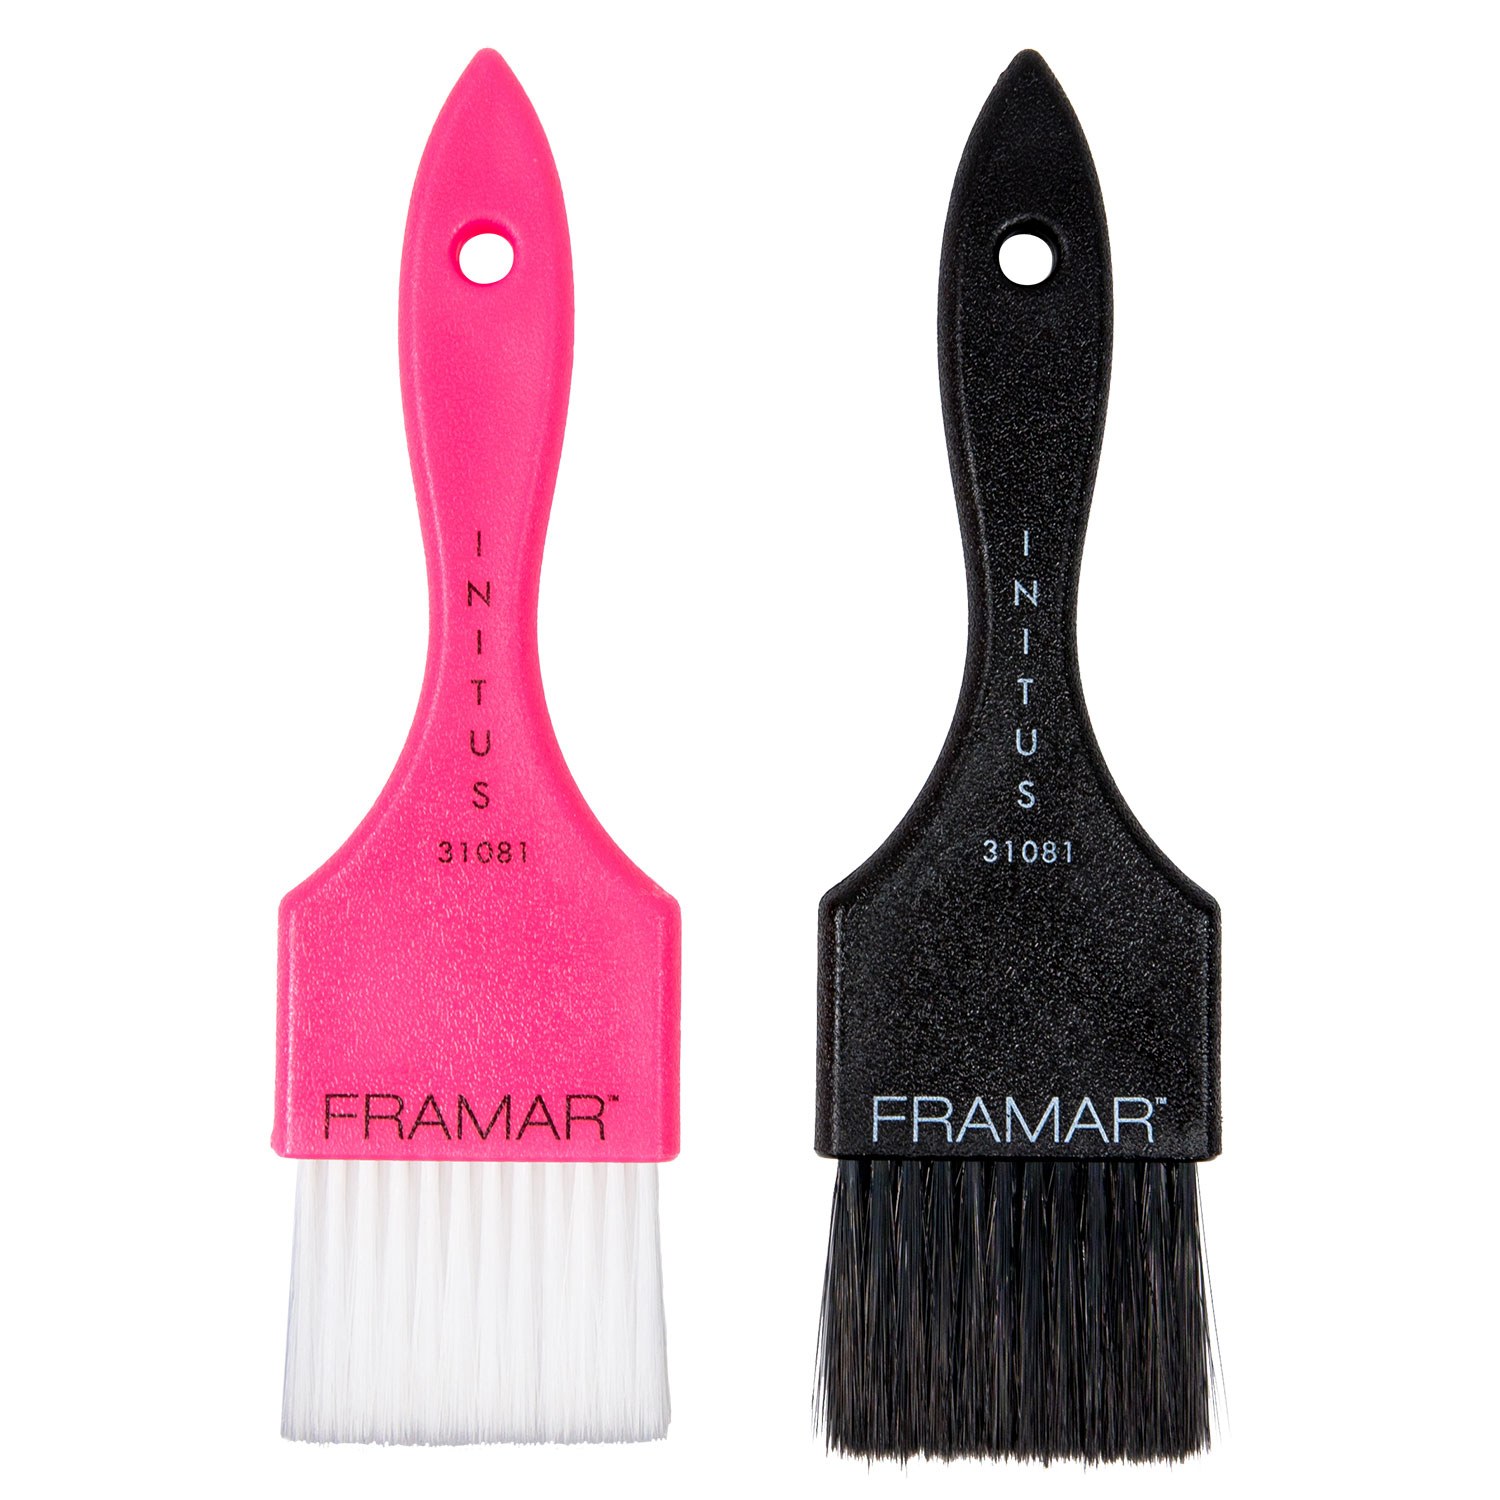 Framar COLOR BRUSHES: Power Painter Color Brush Set - 2 Pk